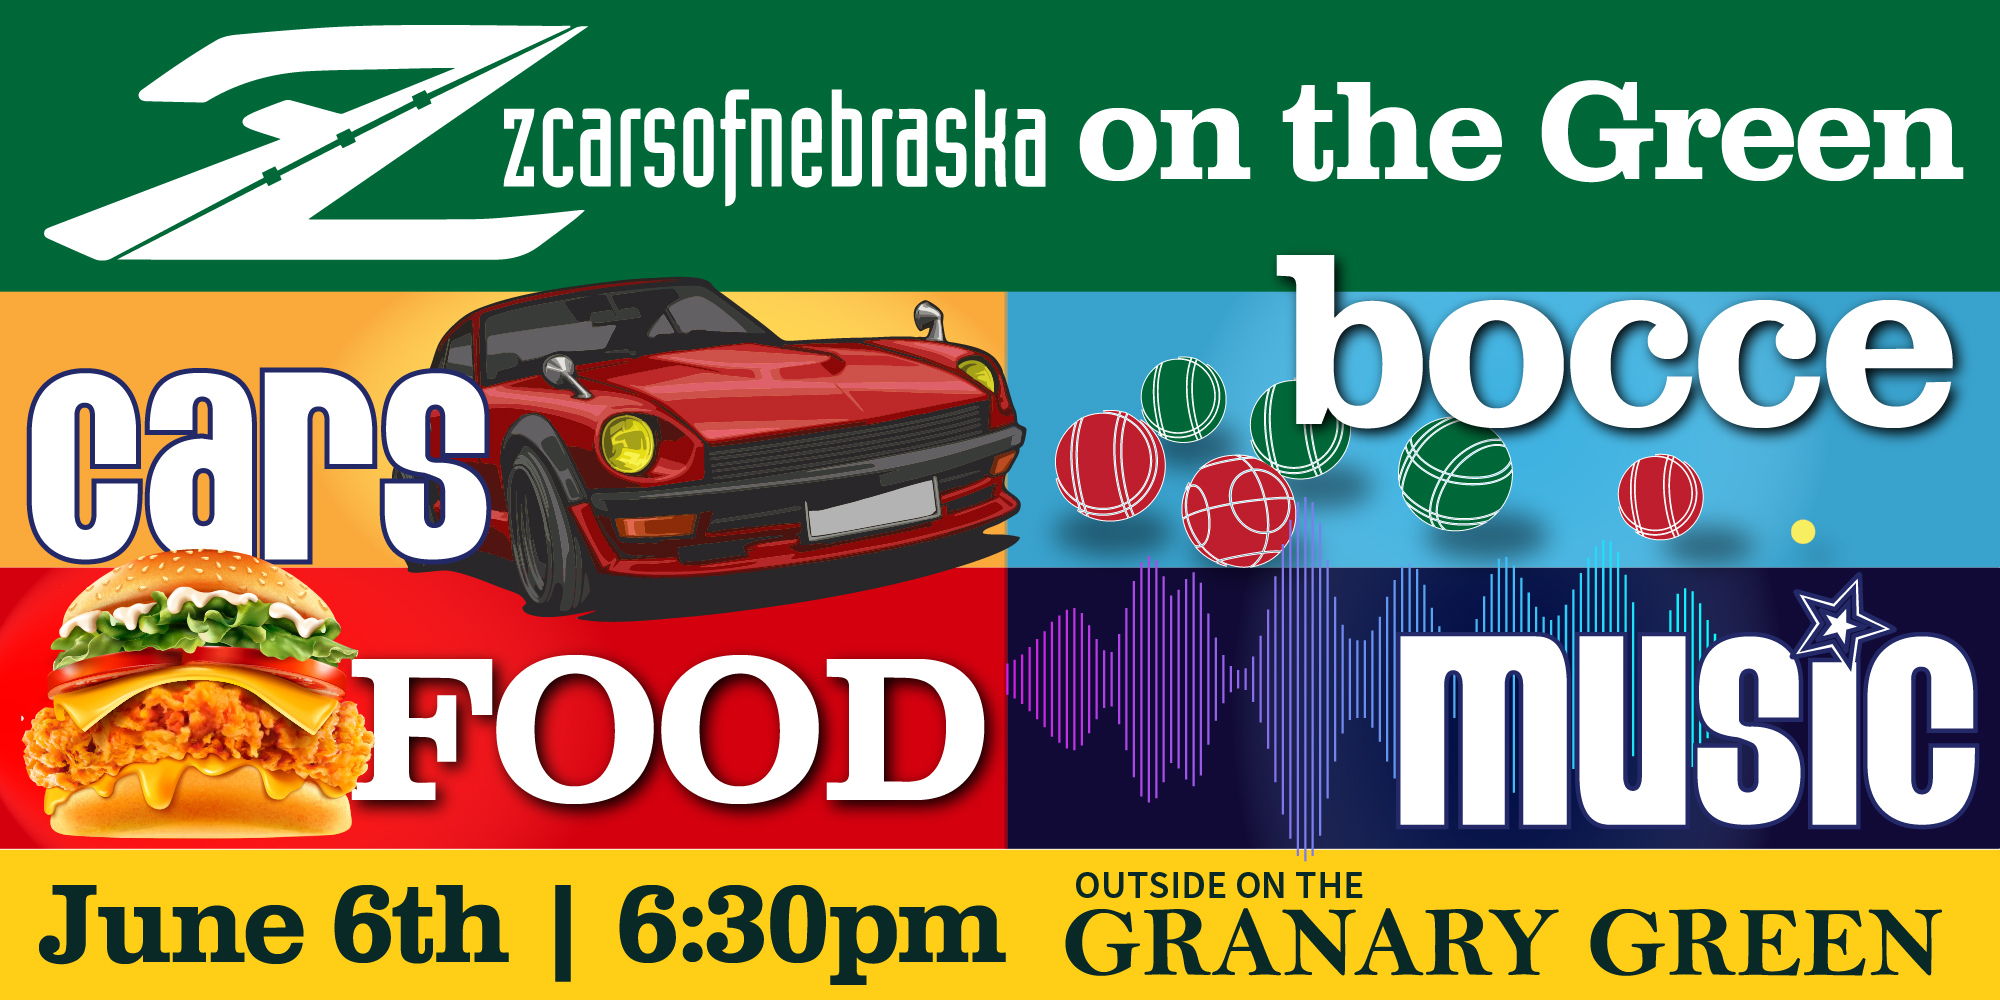 Z Cars of Nebraska Zocial on the Green! promotional image